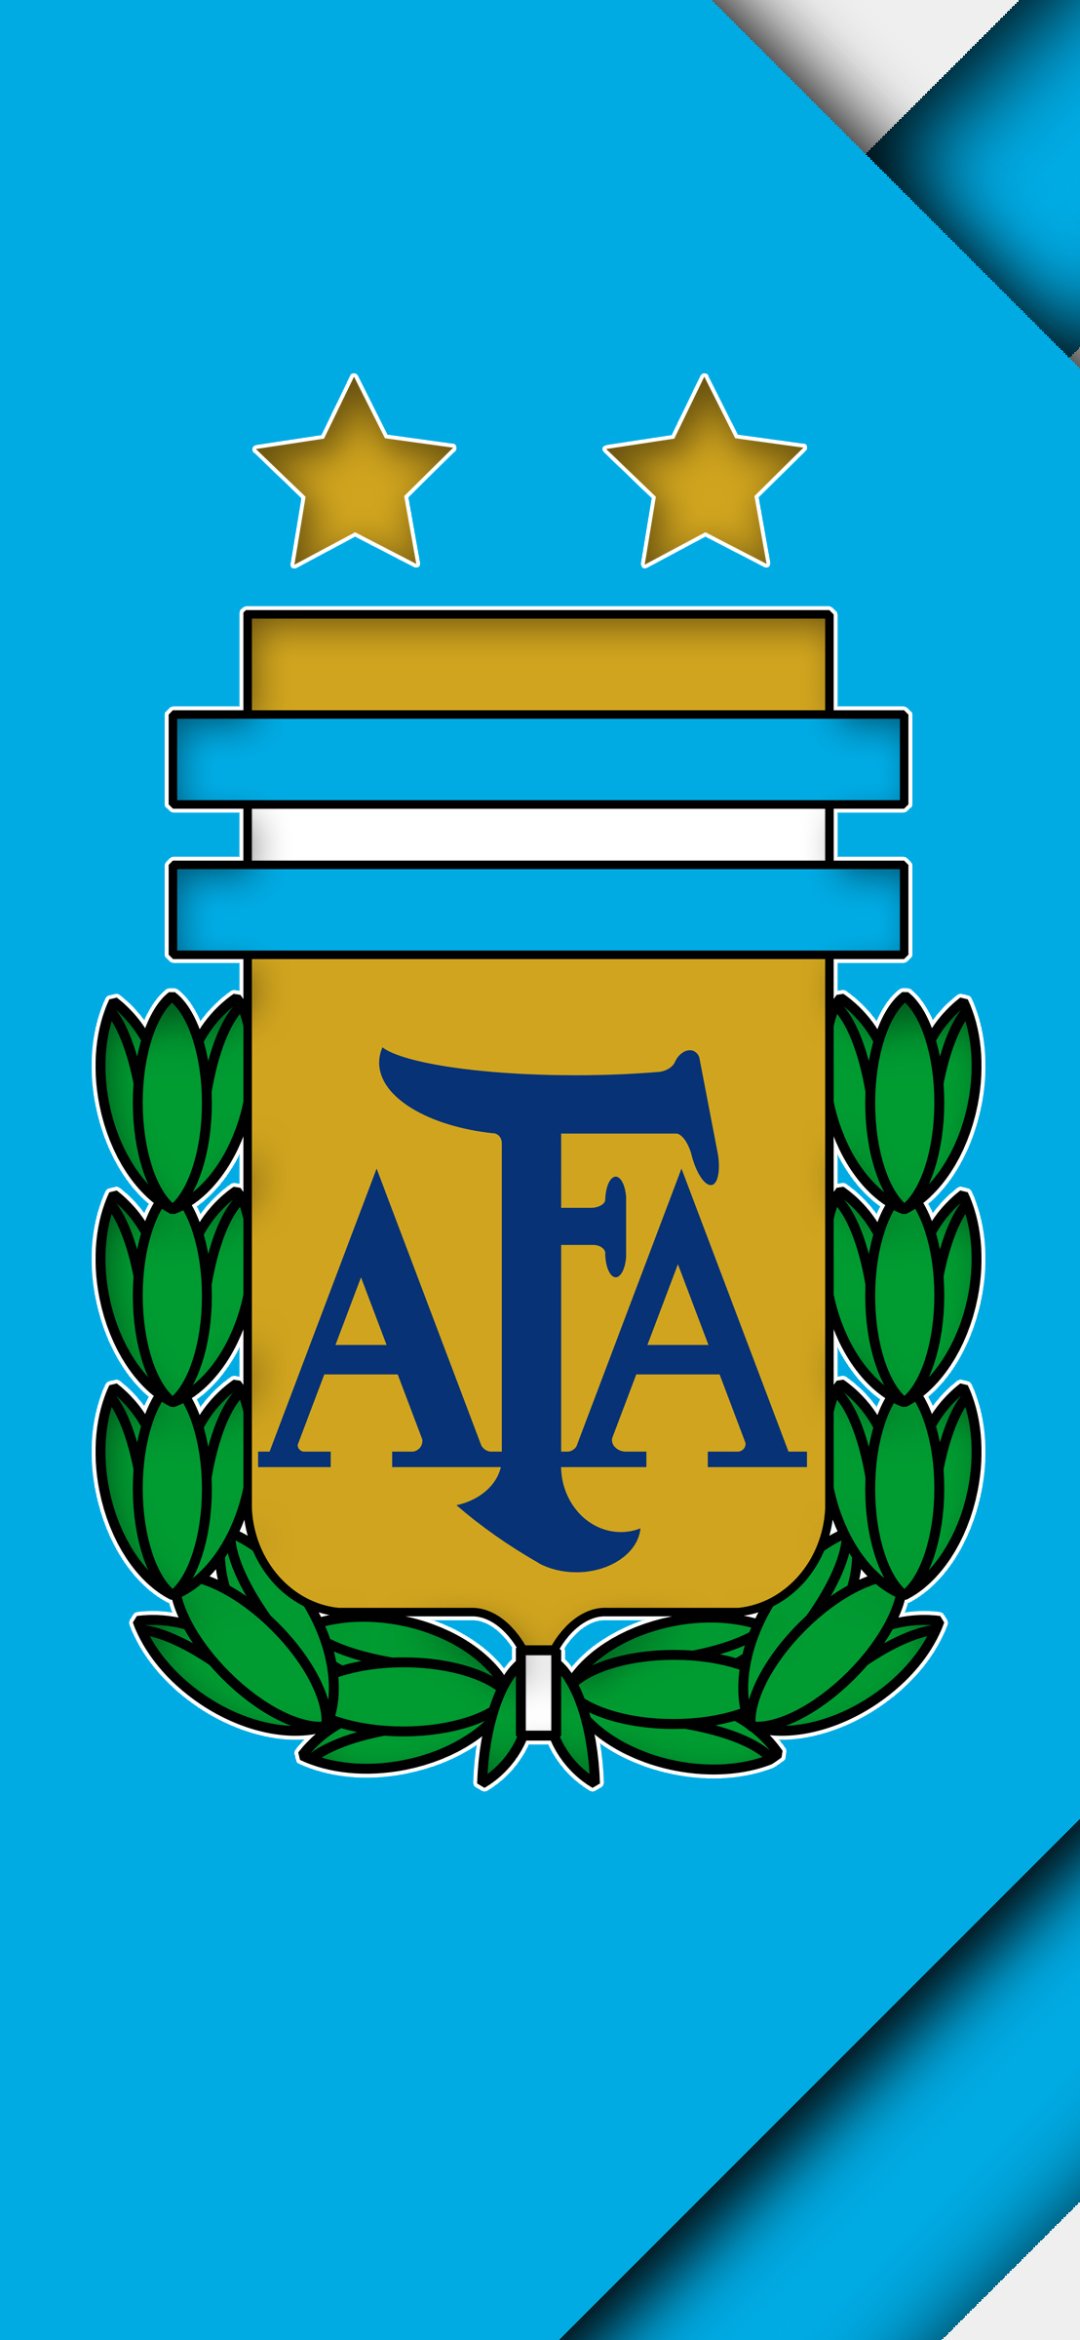 Sports Argentina National Football Team